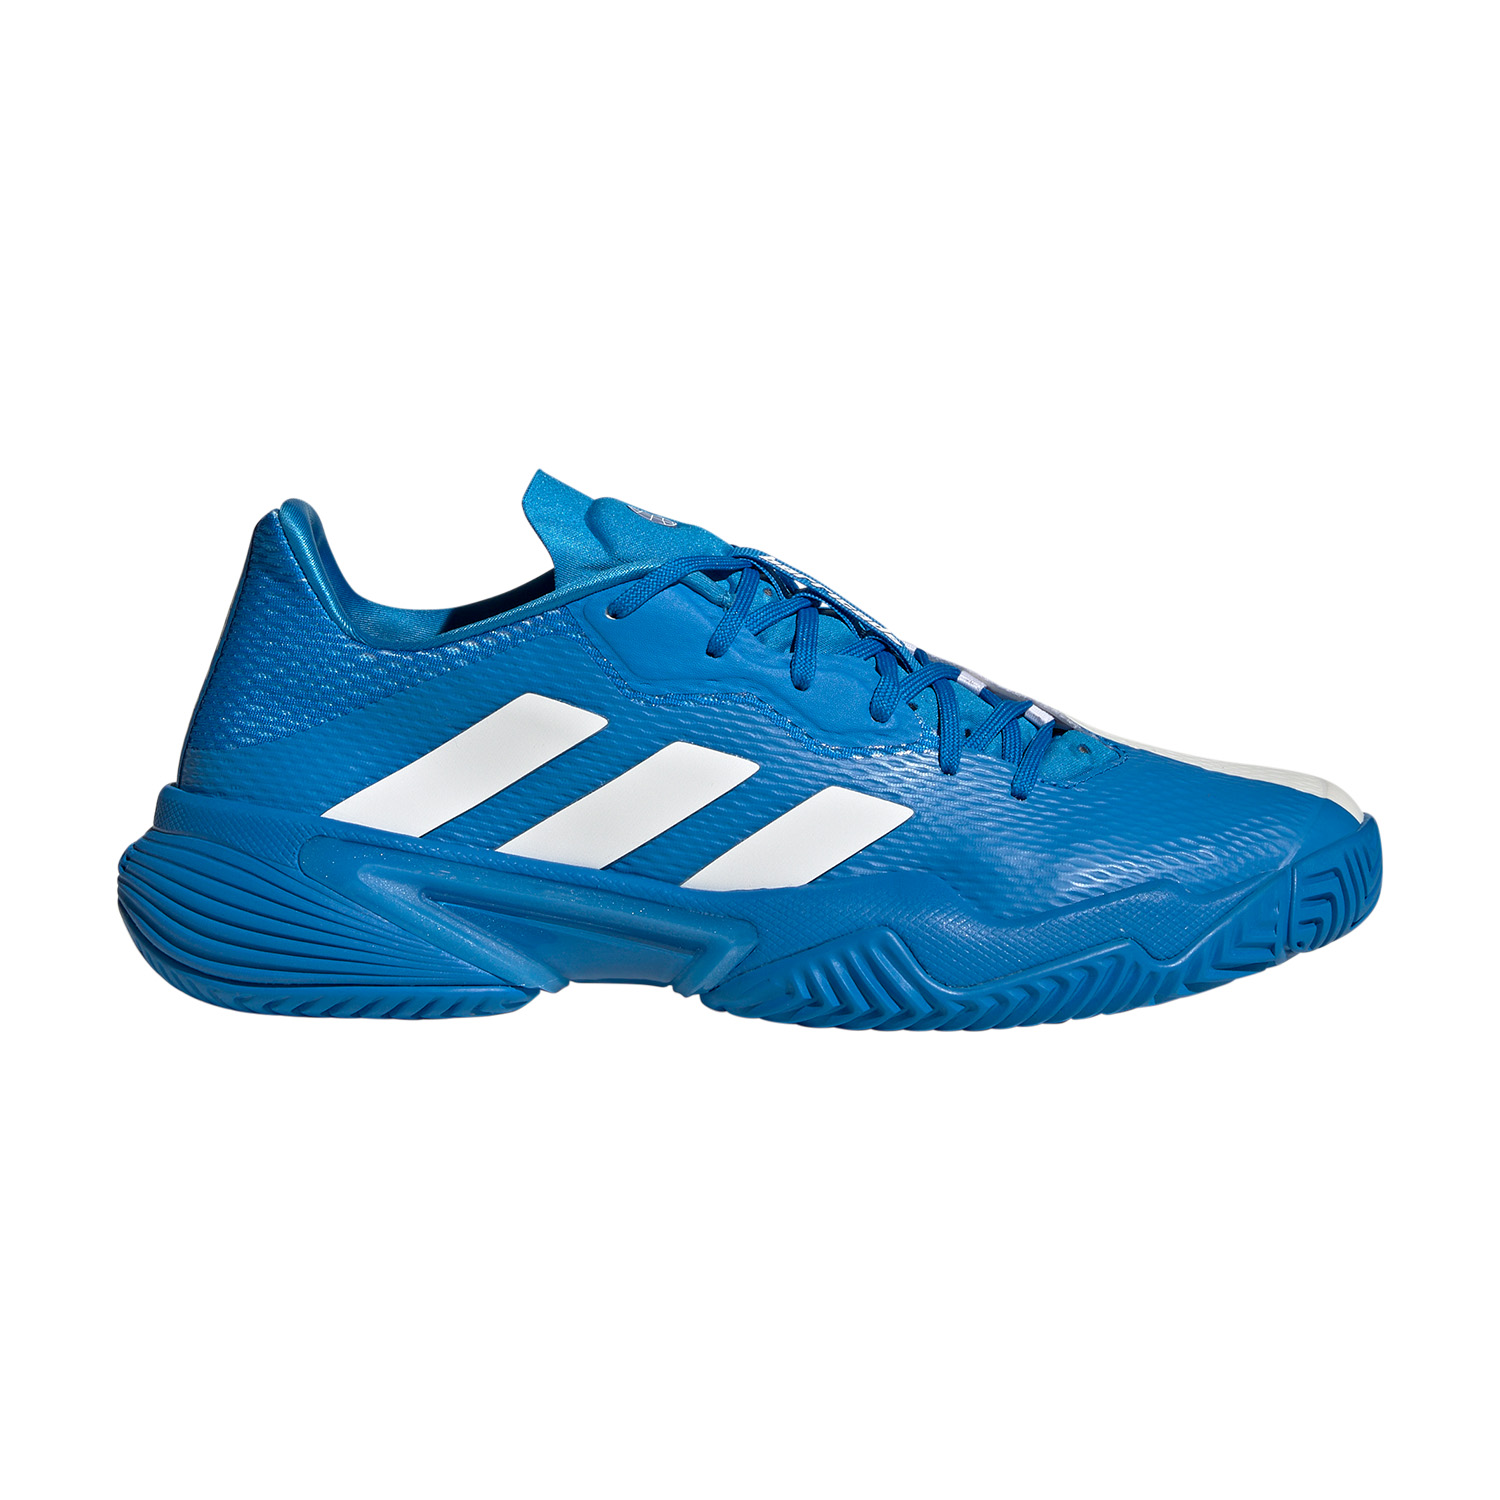 adidas Barricade Men's Tennis Shoes - Blue Tint S18